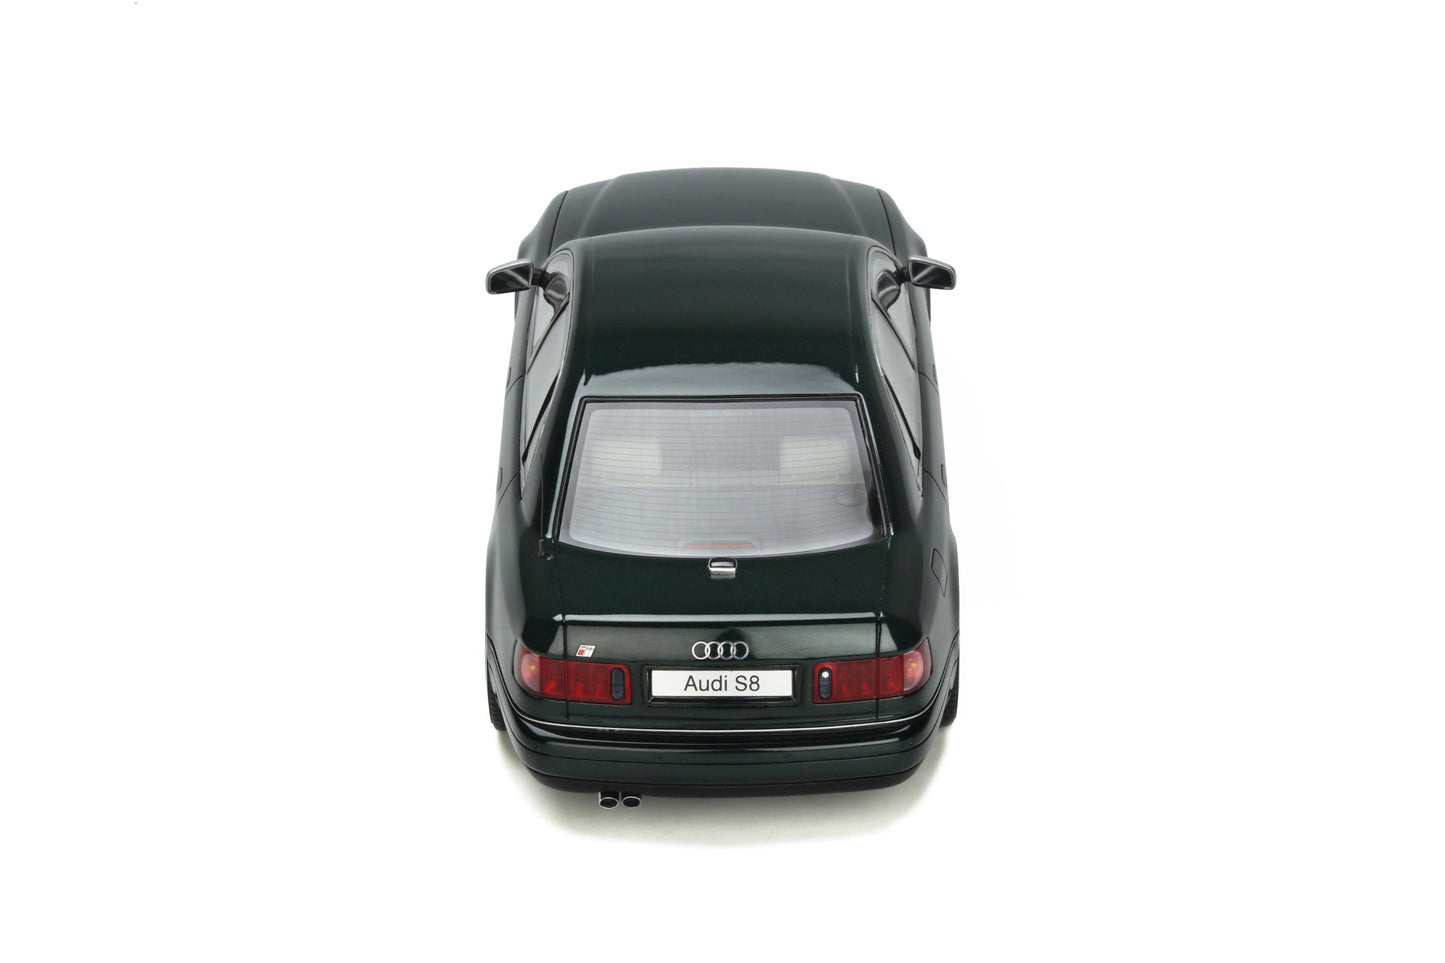 OttOmobile - Audi S8 (D2) (Green) 1:18 Scale Model Car